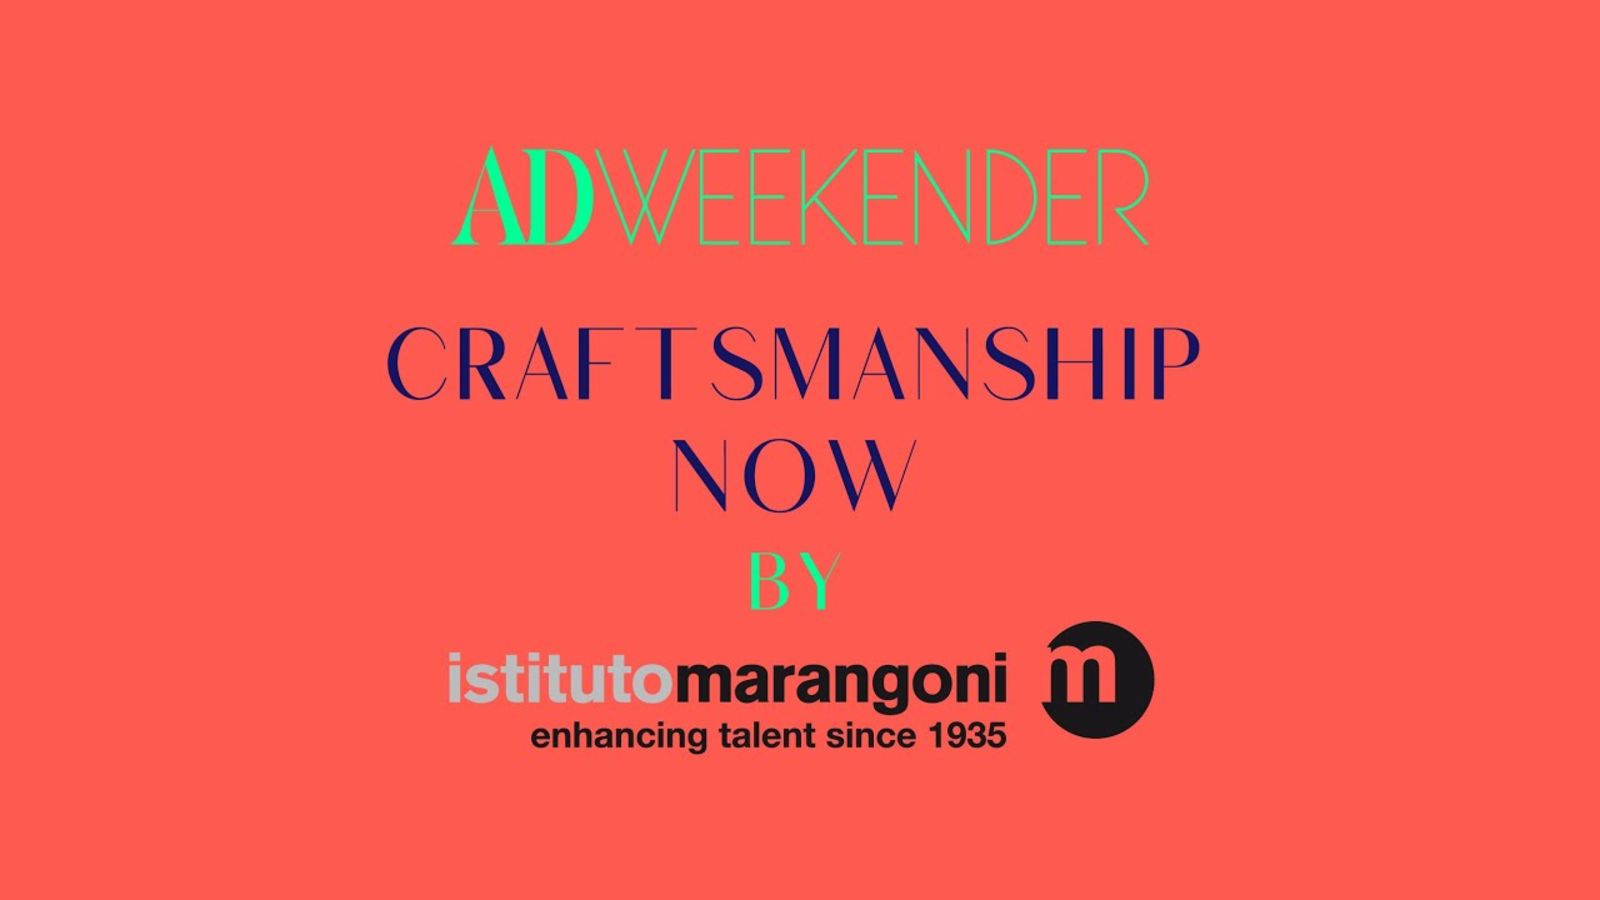 AD Weekender - Istituto Marangoni (Craftsmanship Now)